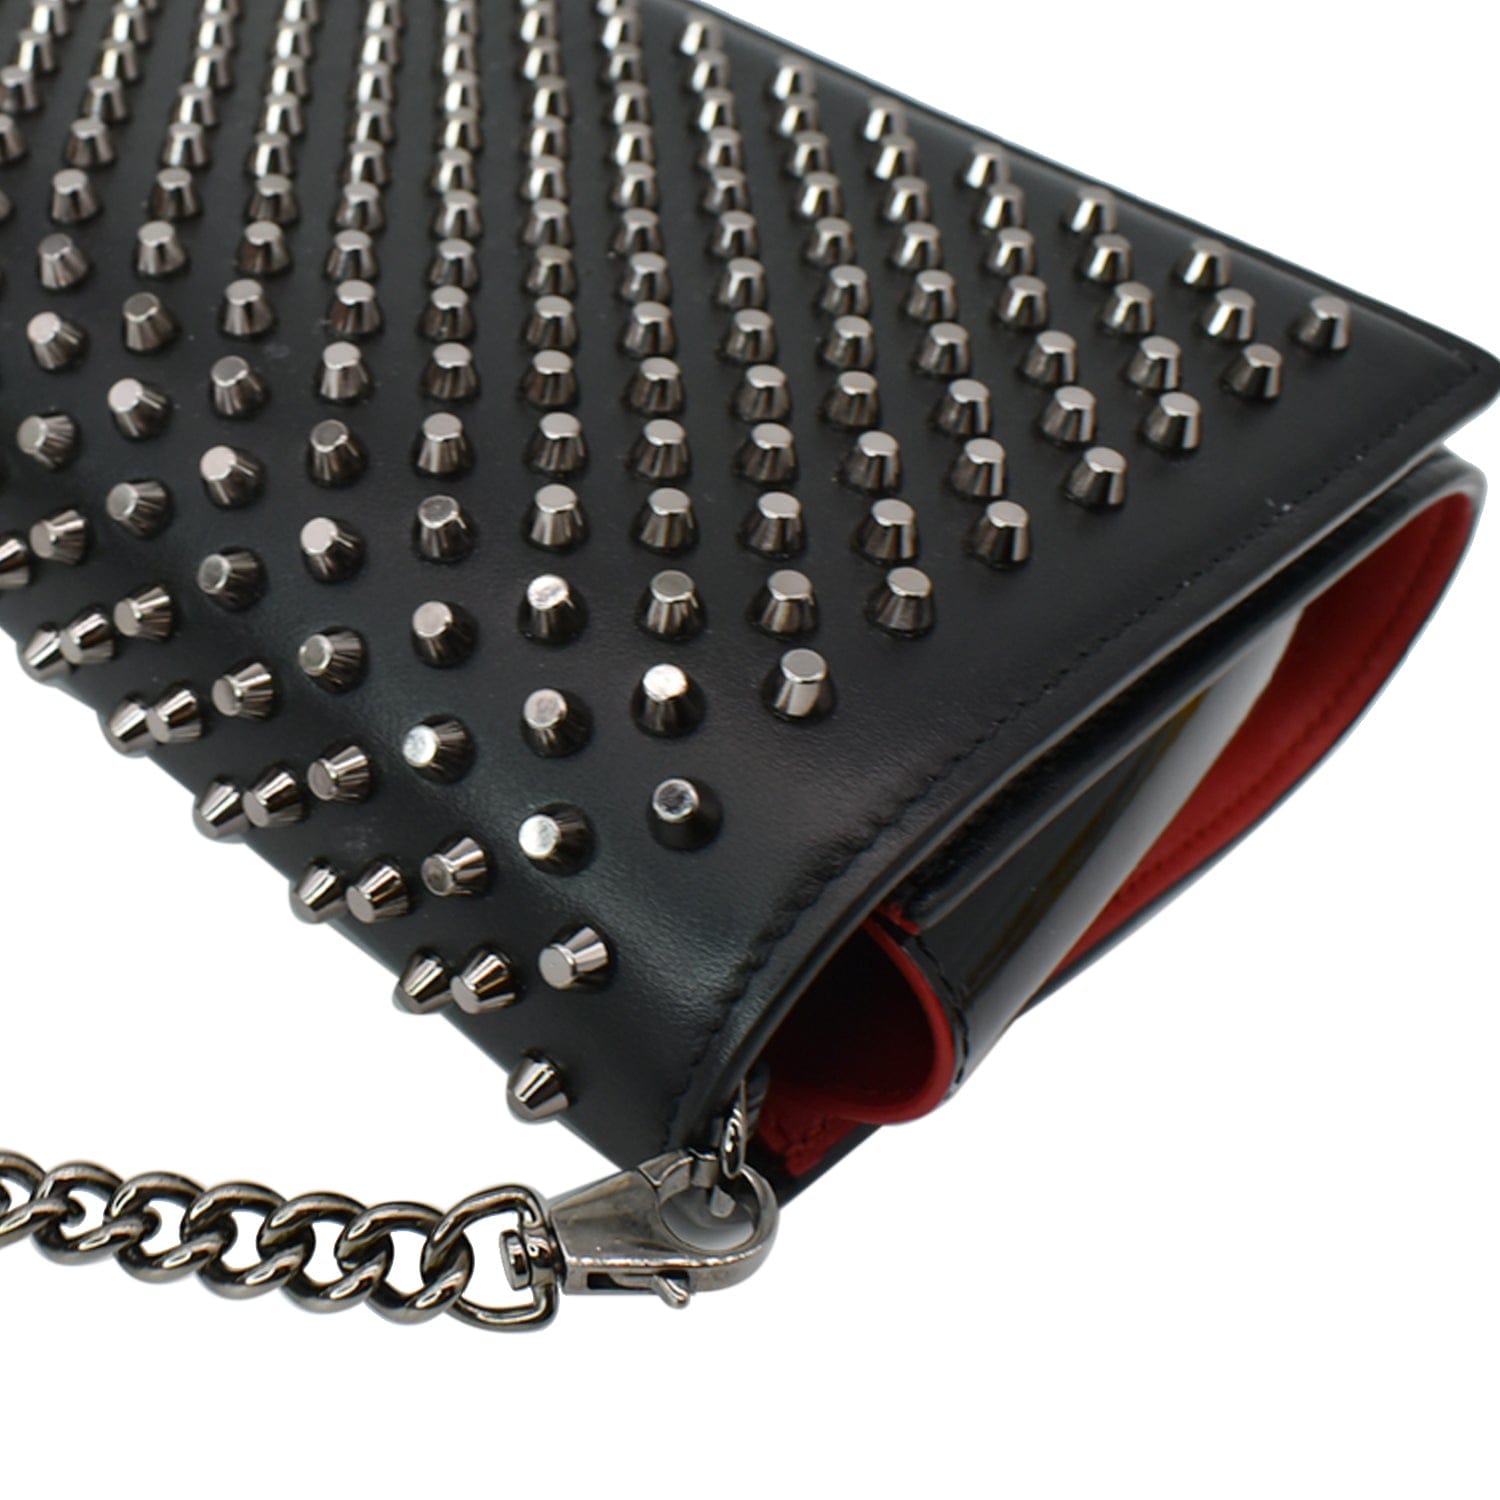 Christian Louboutin Paloma Studded Leather Chain Clutch Bag